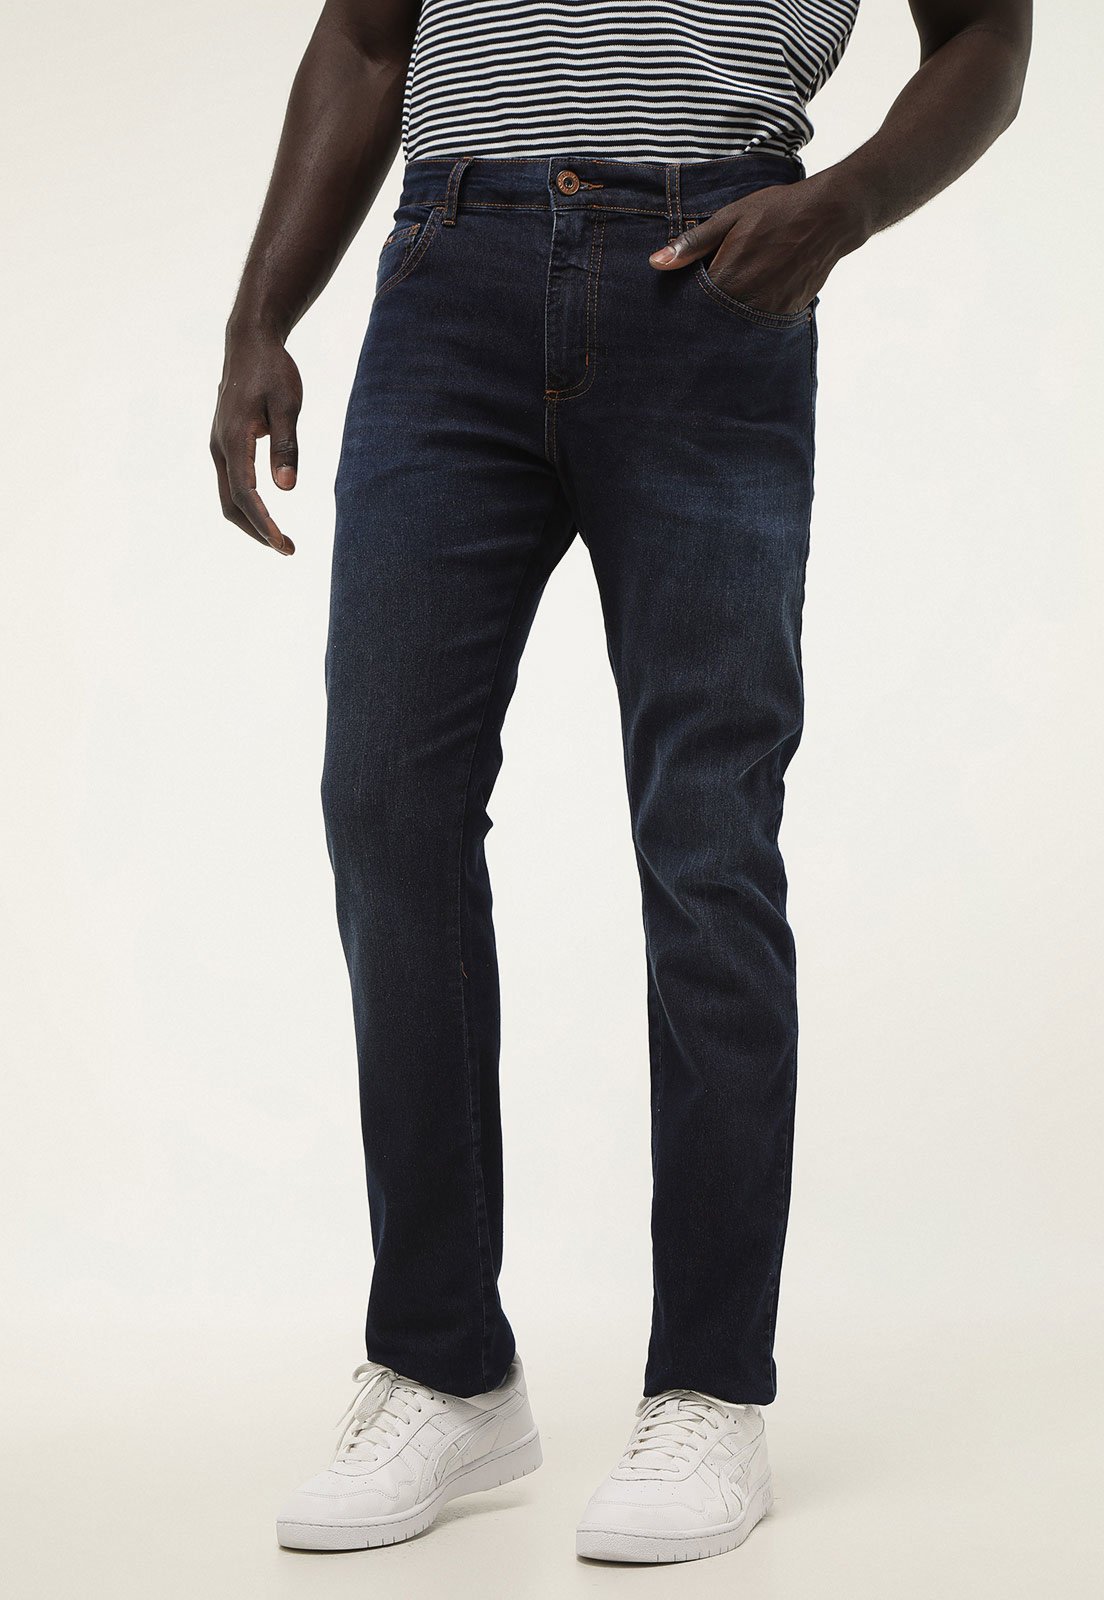 Calça Jeans Forum Slim Estonada Azul